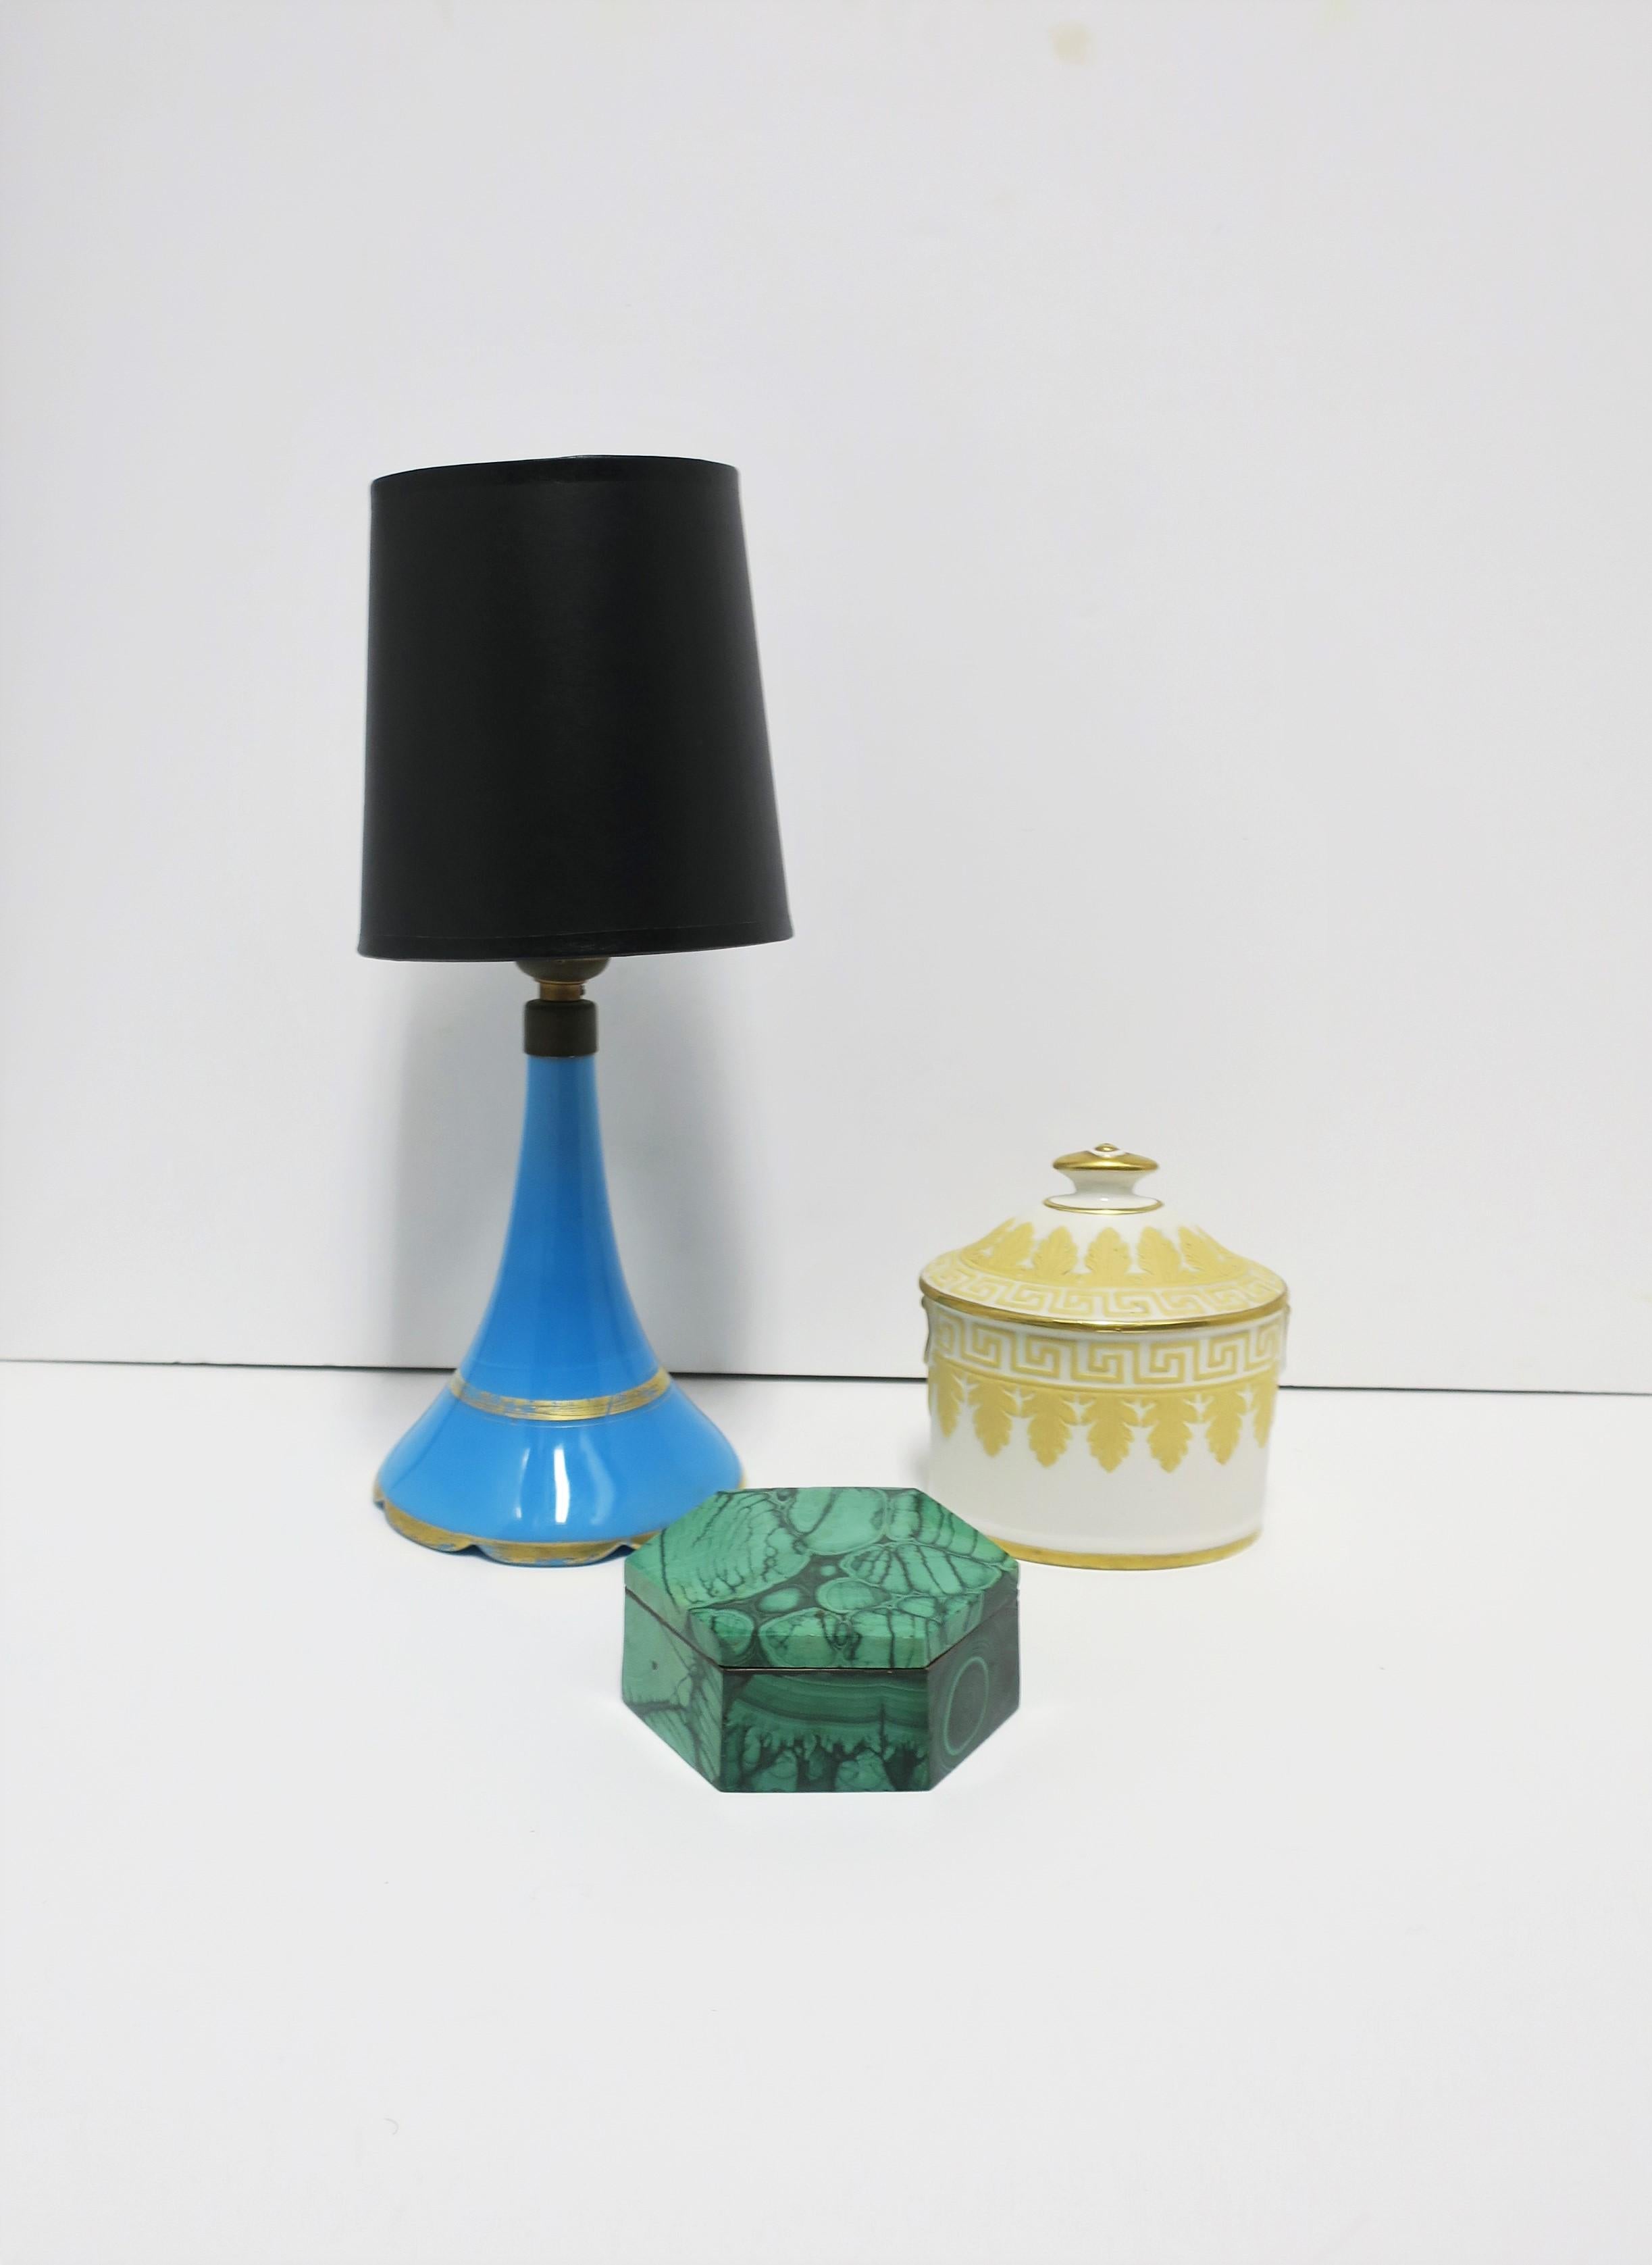 Or Lampe de bureau italienne en verre opalin bleu avec bord festonné en vente